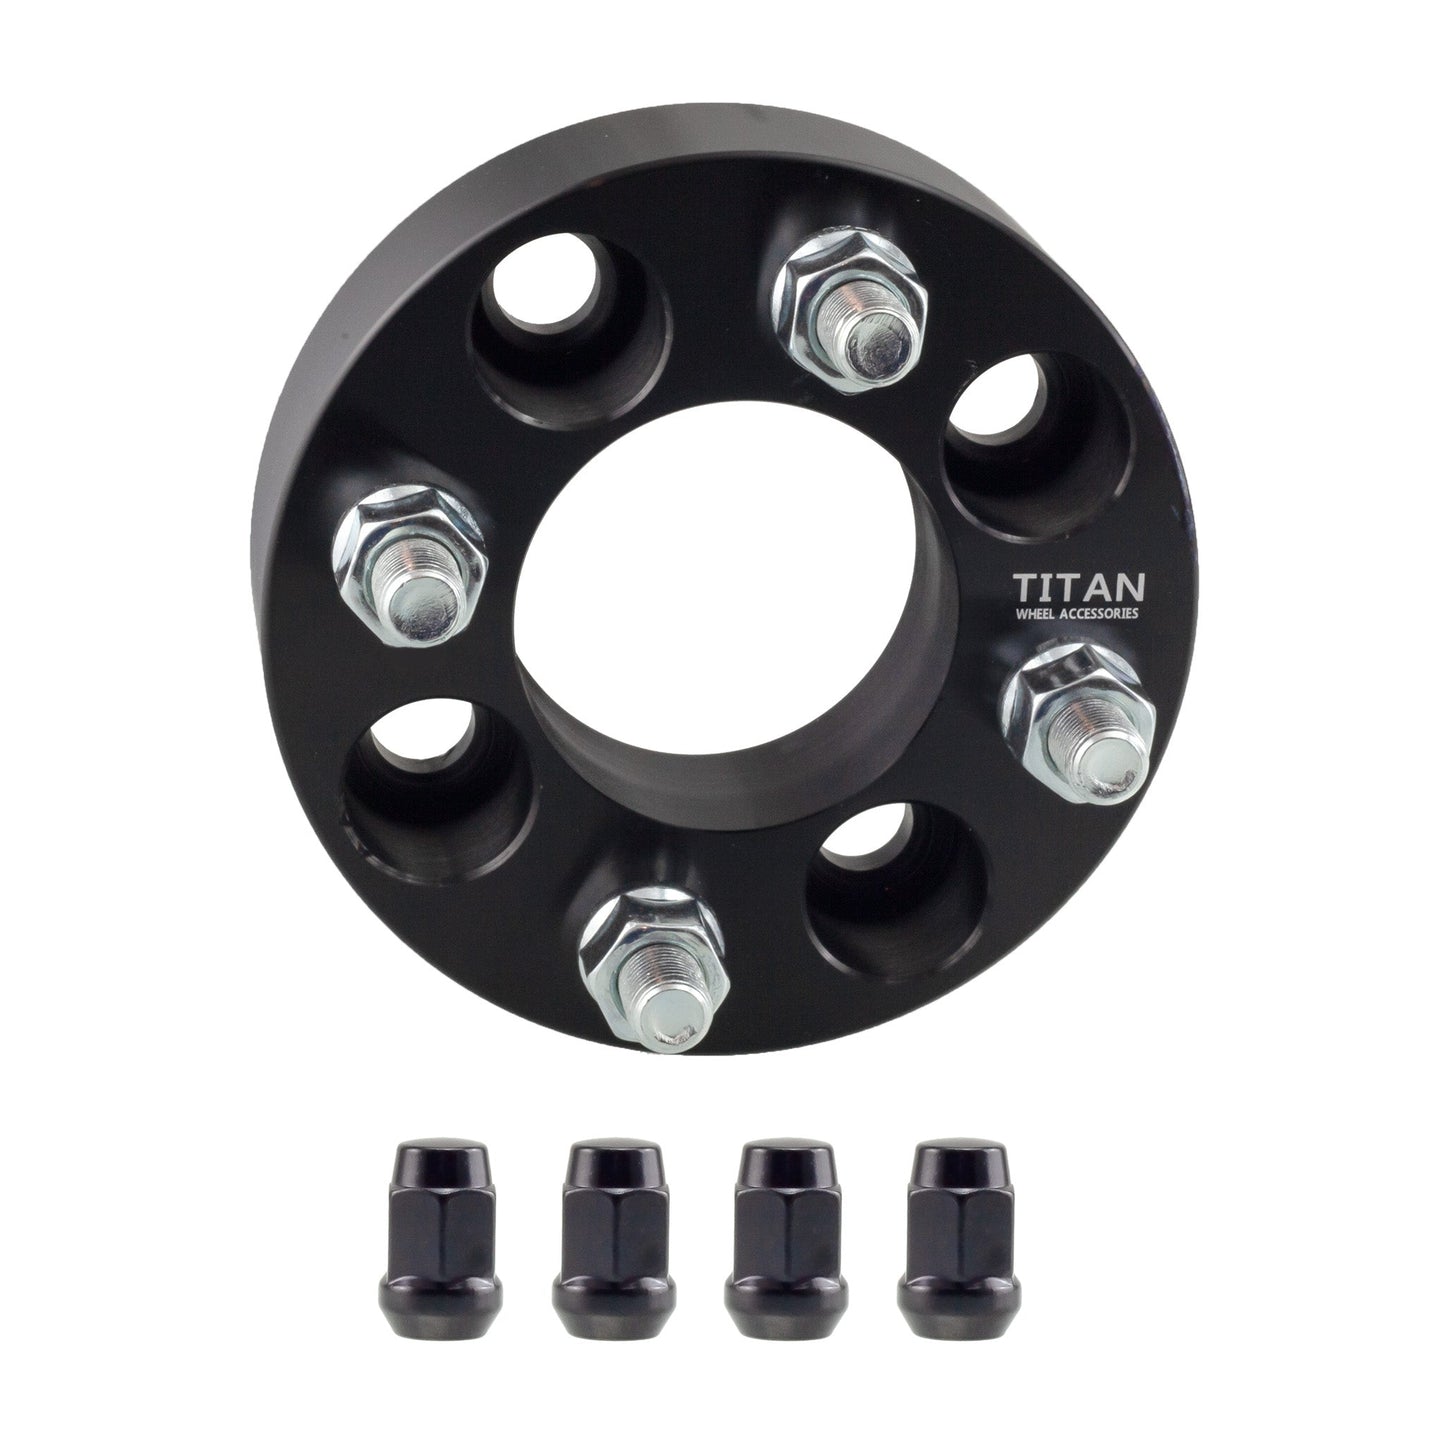 15mm Titan Wheel Spacers for Chevy Cobalt Dodge Neon | 4x100 | 57.1 Hubcentric | 12x1.5 Studs | Titan Wheel Accessories